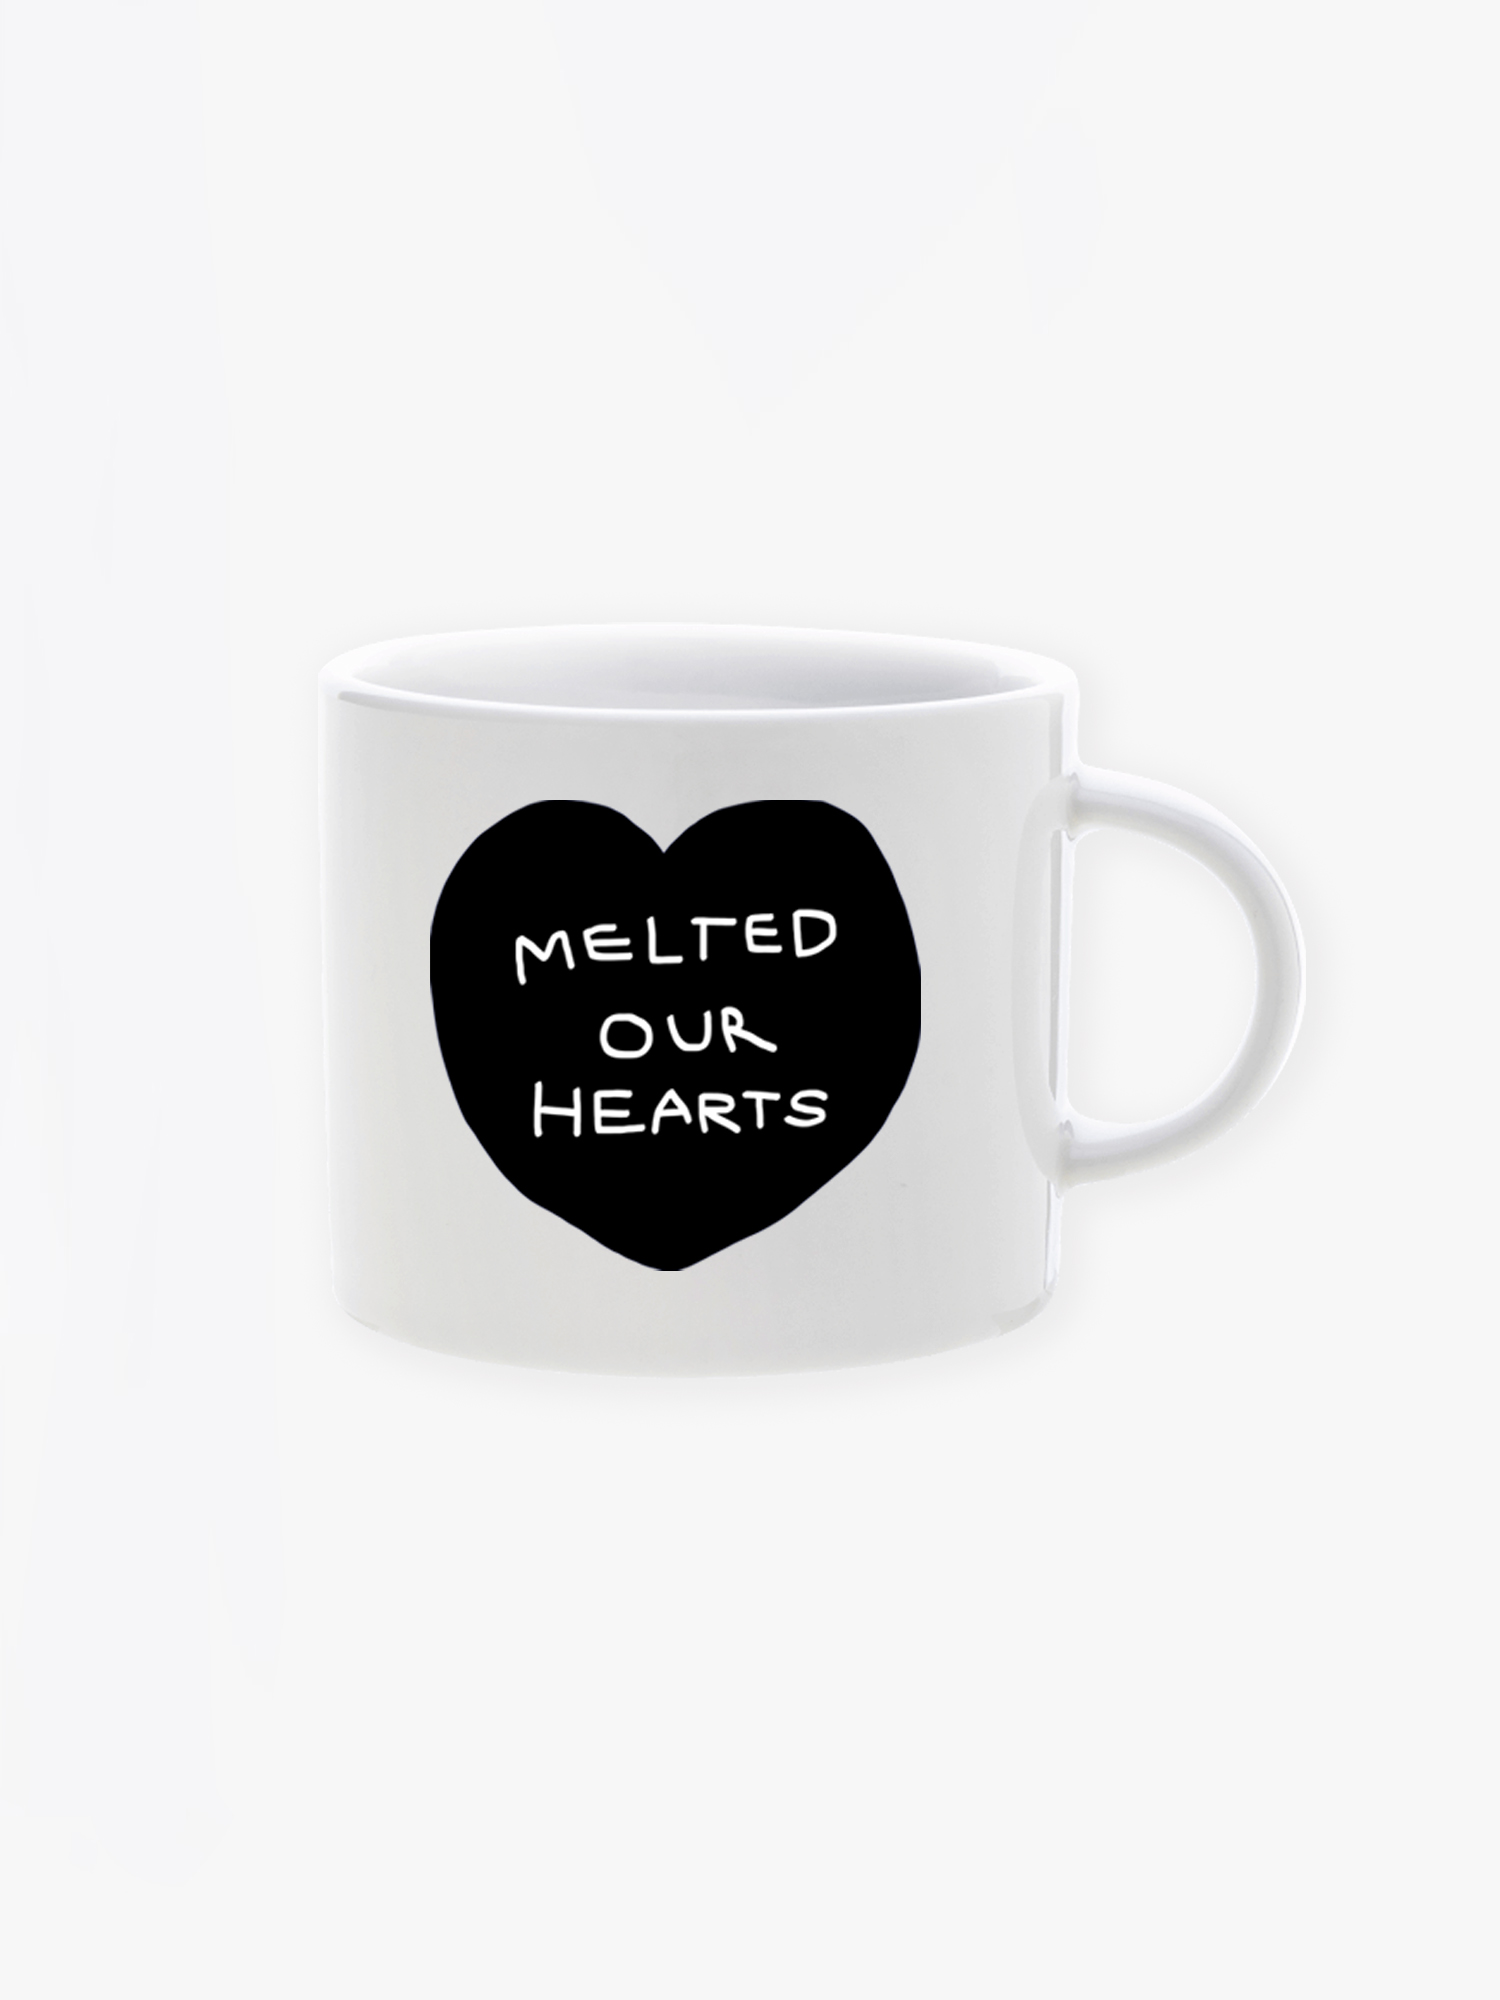 Melted our hearts Mug (Black)